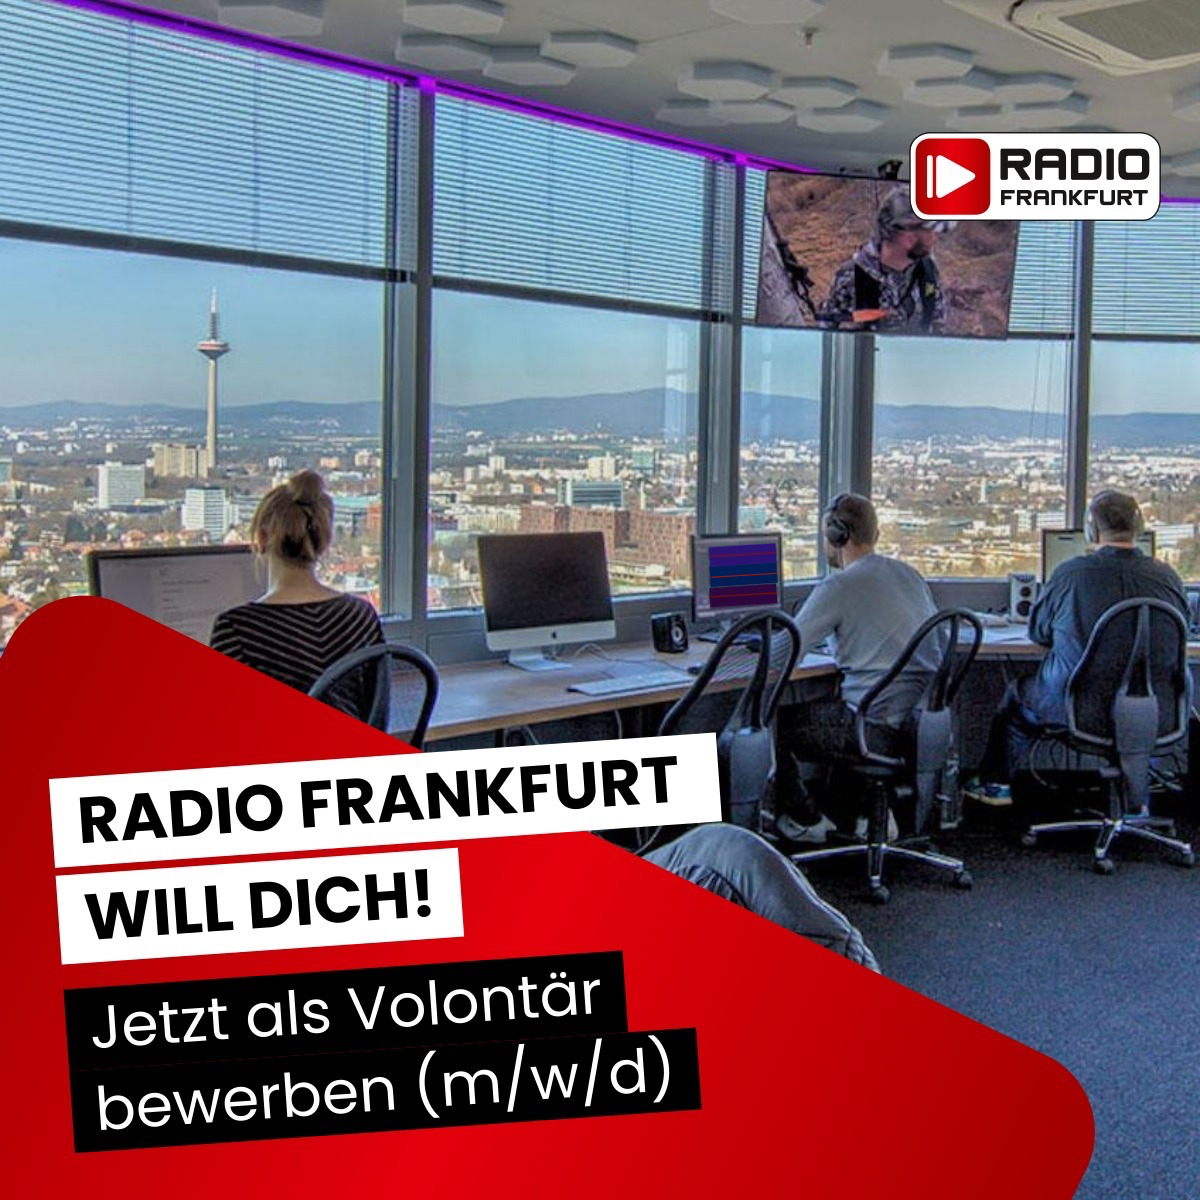 Radio Frankfurt volo bewerbung 2022